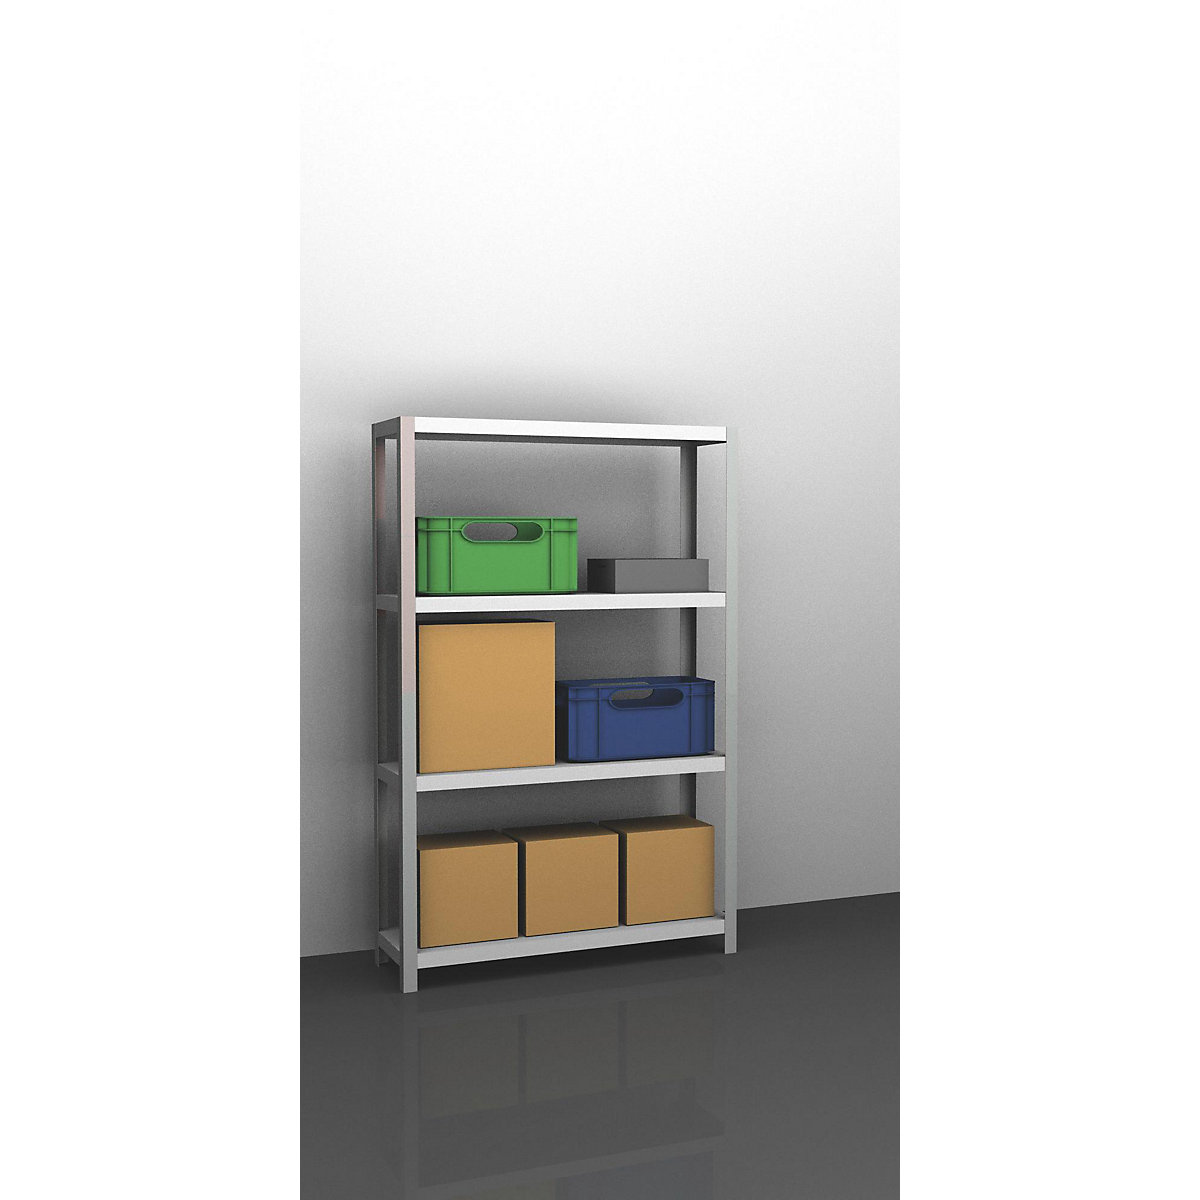 Bolt-together shelf unit, light duty, plastic coated – eurokraft pro, shelf unit height 1500 mm, shelf width 1000 mm, depth 400 mm, standard shelf unit-11